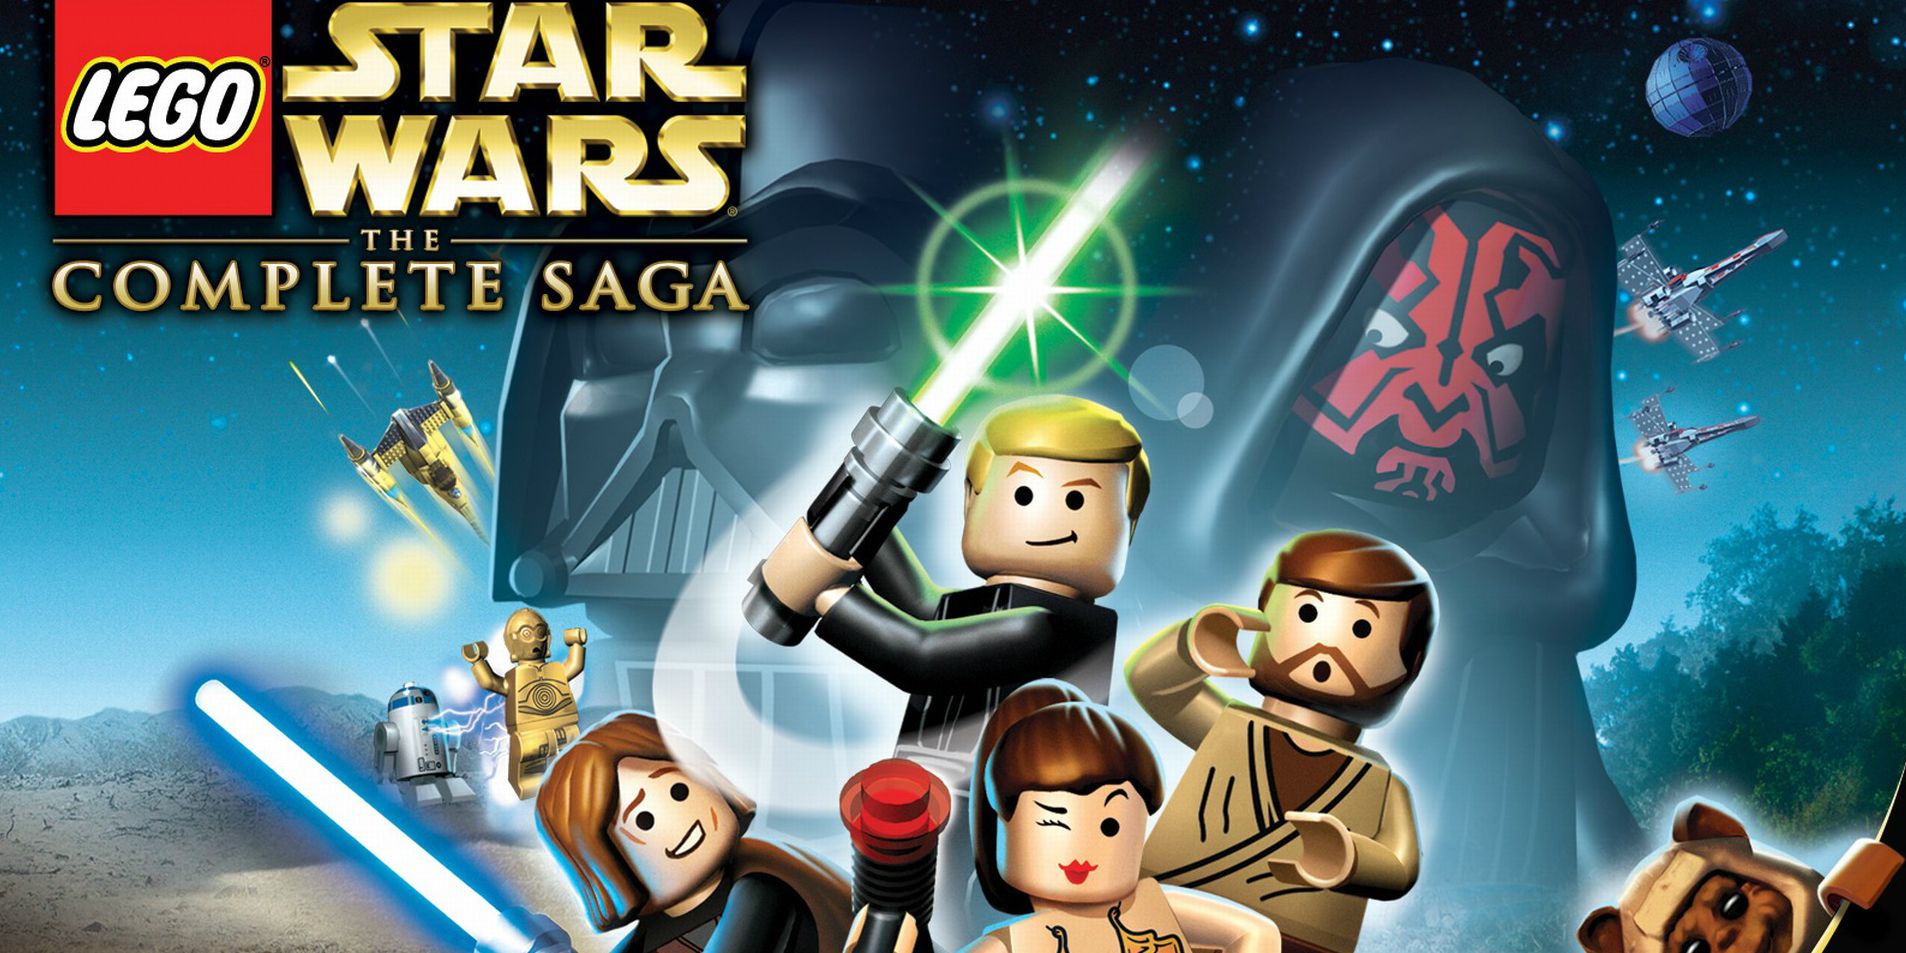 Lego Star Wars the Complete Saga poster. Darth Maul and Darth Vader, Obi-Wan, Anakin, Luke and Leia all included